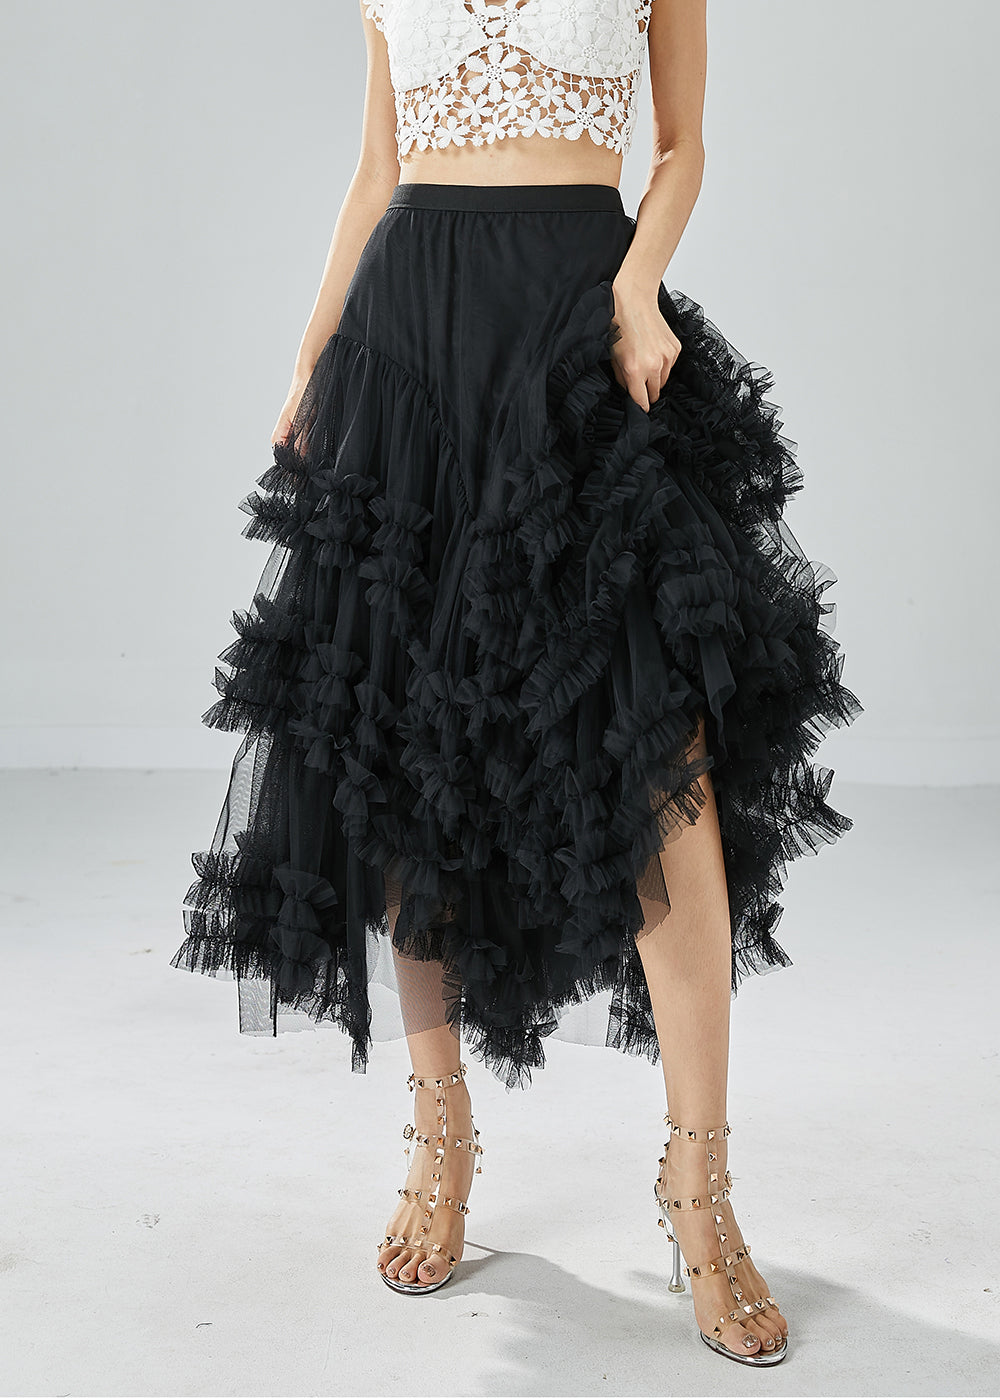 Art Black Asymmetrical Patchwork Ruffled Tulle Beach Skirts Summer LY6056 - fabuloryshop